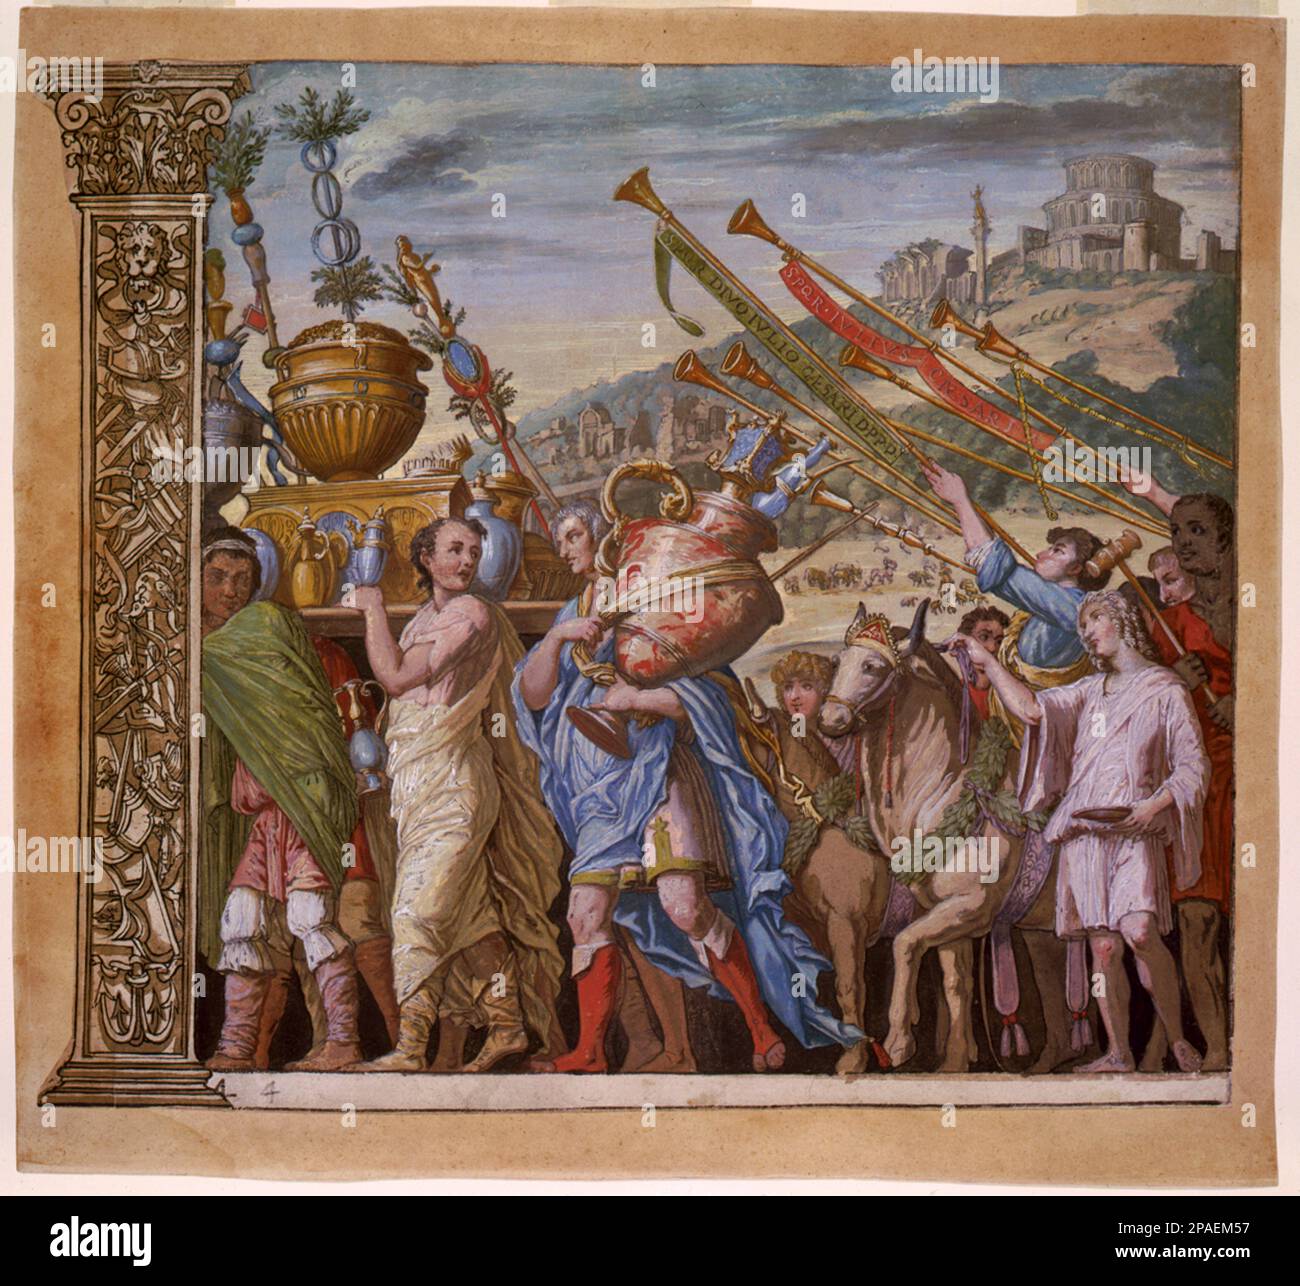 1598 CA : le Triunph (US) Césaris ( le triomphe de Jules César - il TRIONFO DI GIULIO CESARE ), plaque 4 ( chiaroscuro coupe de bois avec gouache ), par le peintre italien Andrea Andreani ( 1584 - 1610 ), des fresques originales d'ANDREA MANTEGNA . - PORTRAIT - RITRATTO - ANTICA ROMA - ROME ANTIQUE - RINASCIMENTO - RENAISSANCE - ARTE - ARTS VISUELS - ARTI VISIVE - PITTORE - GRAVURE - INCISIONE - ACQUARELLO --- ARCHIVIO GBB Banque D'Images